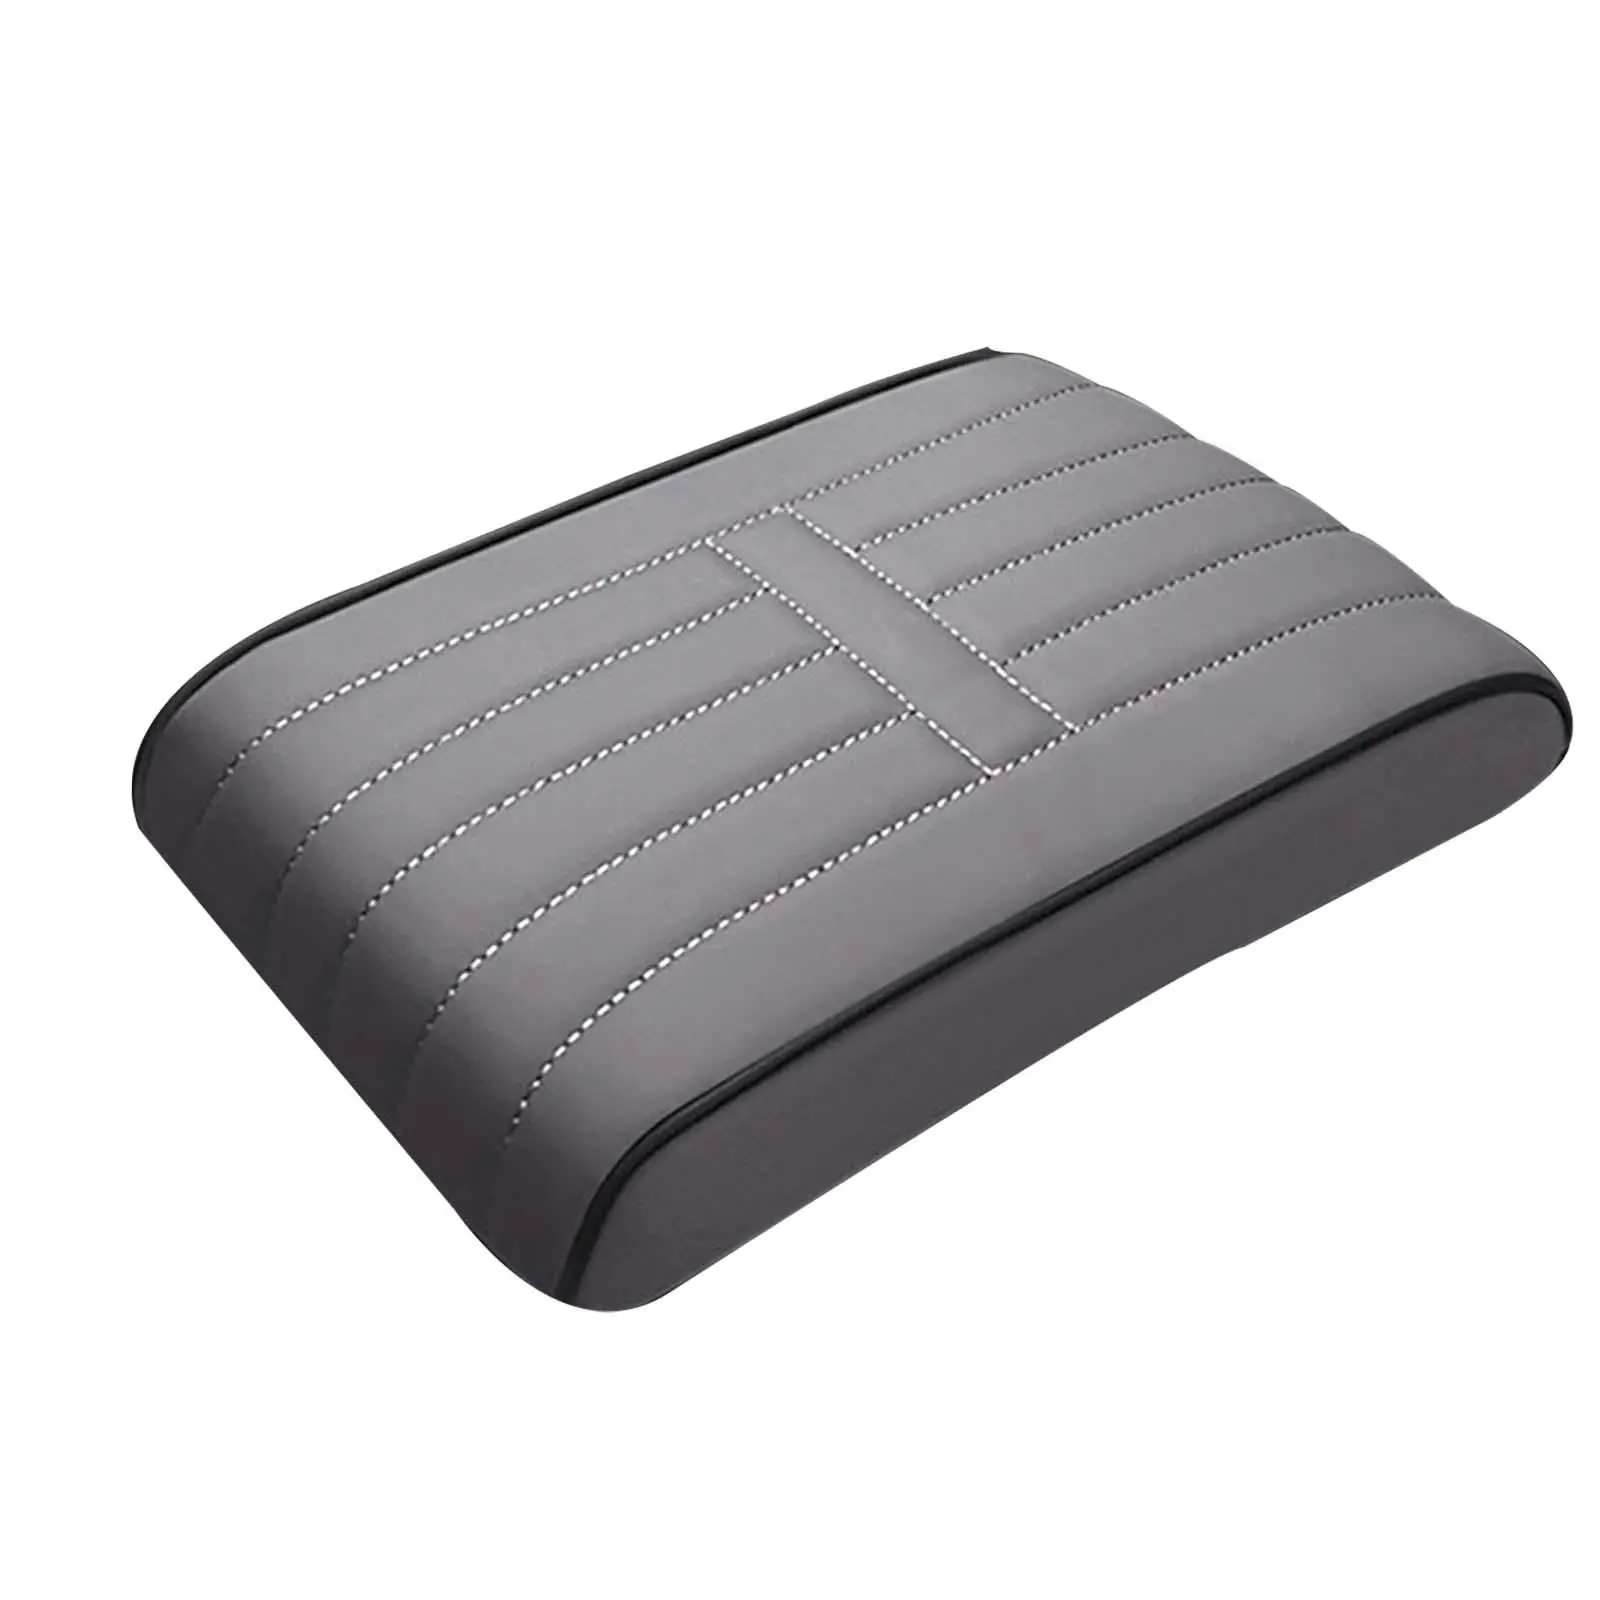 Arm Rest Cushion Pad Car Center Console Box Cushion Pad for Vehicle SUV